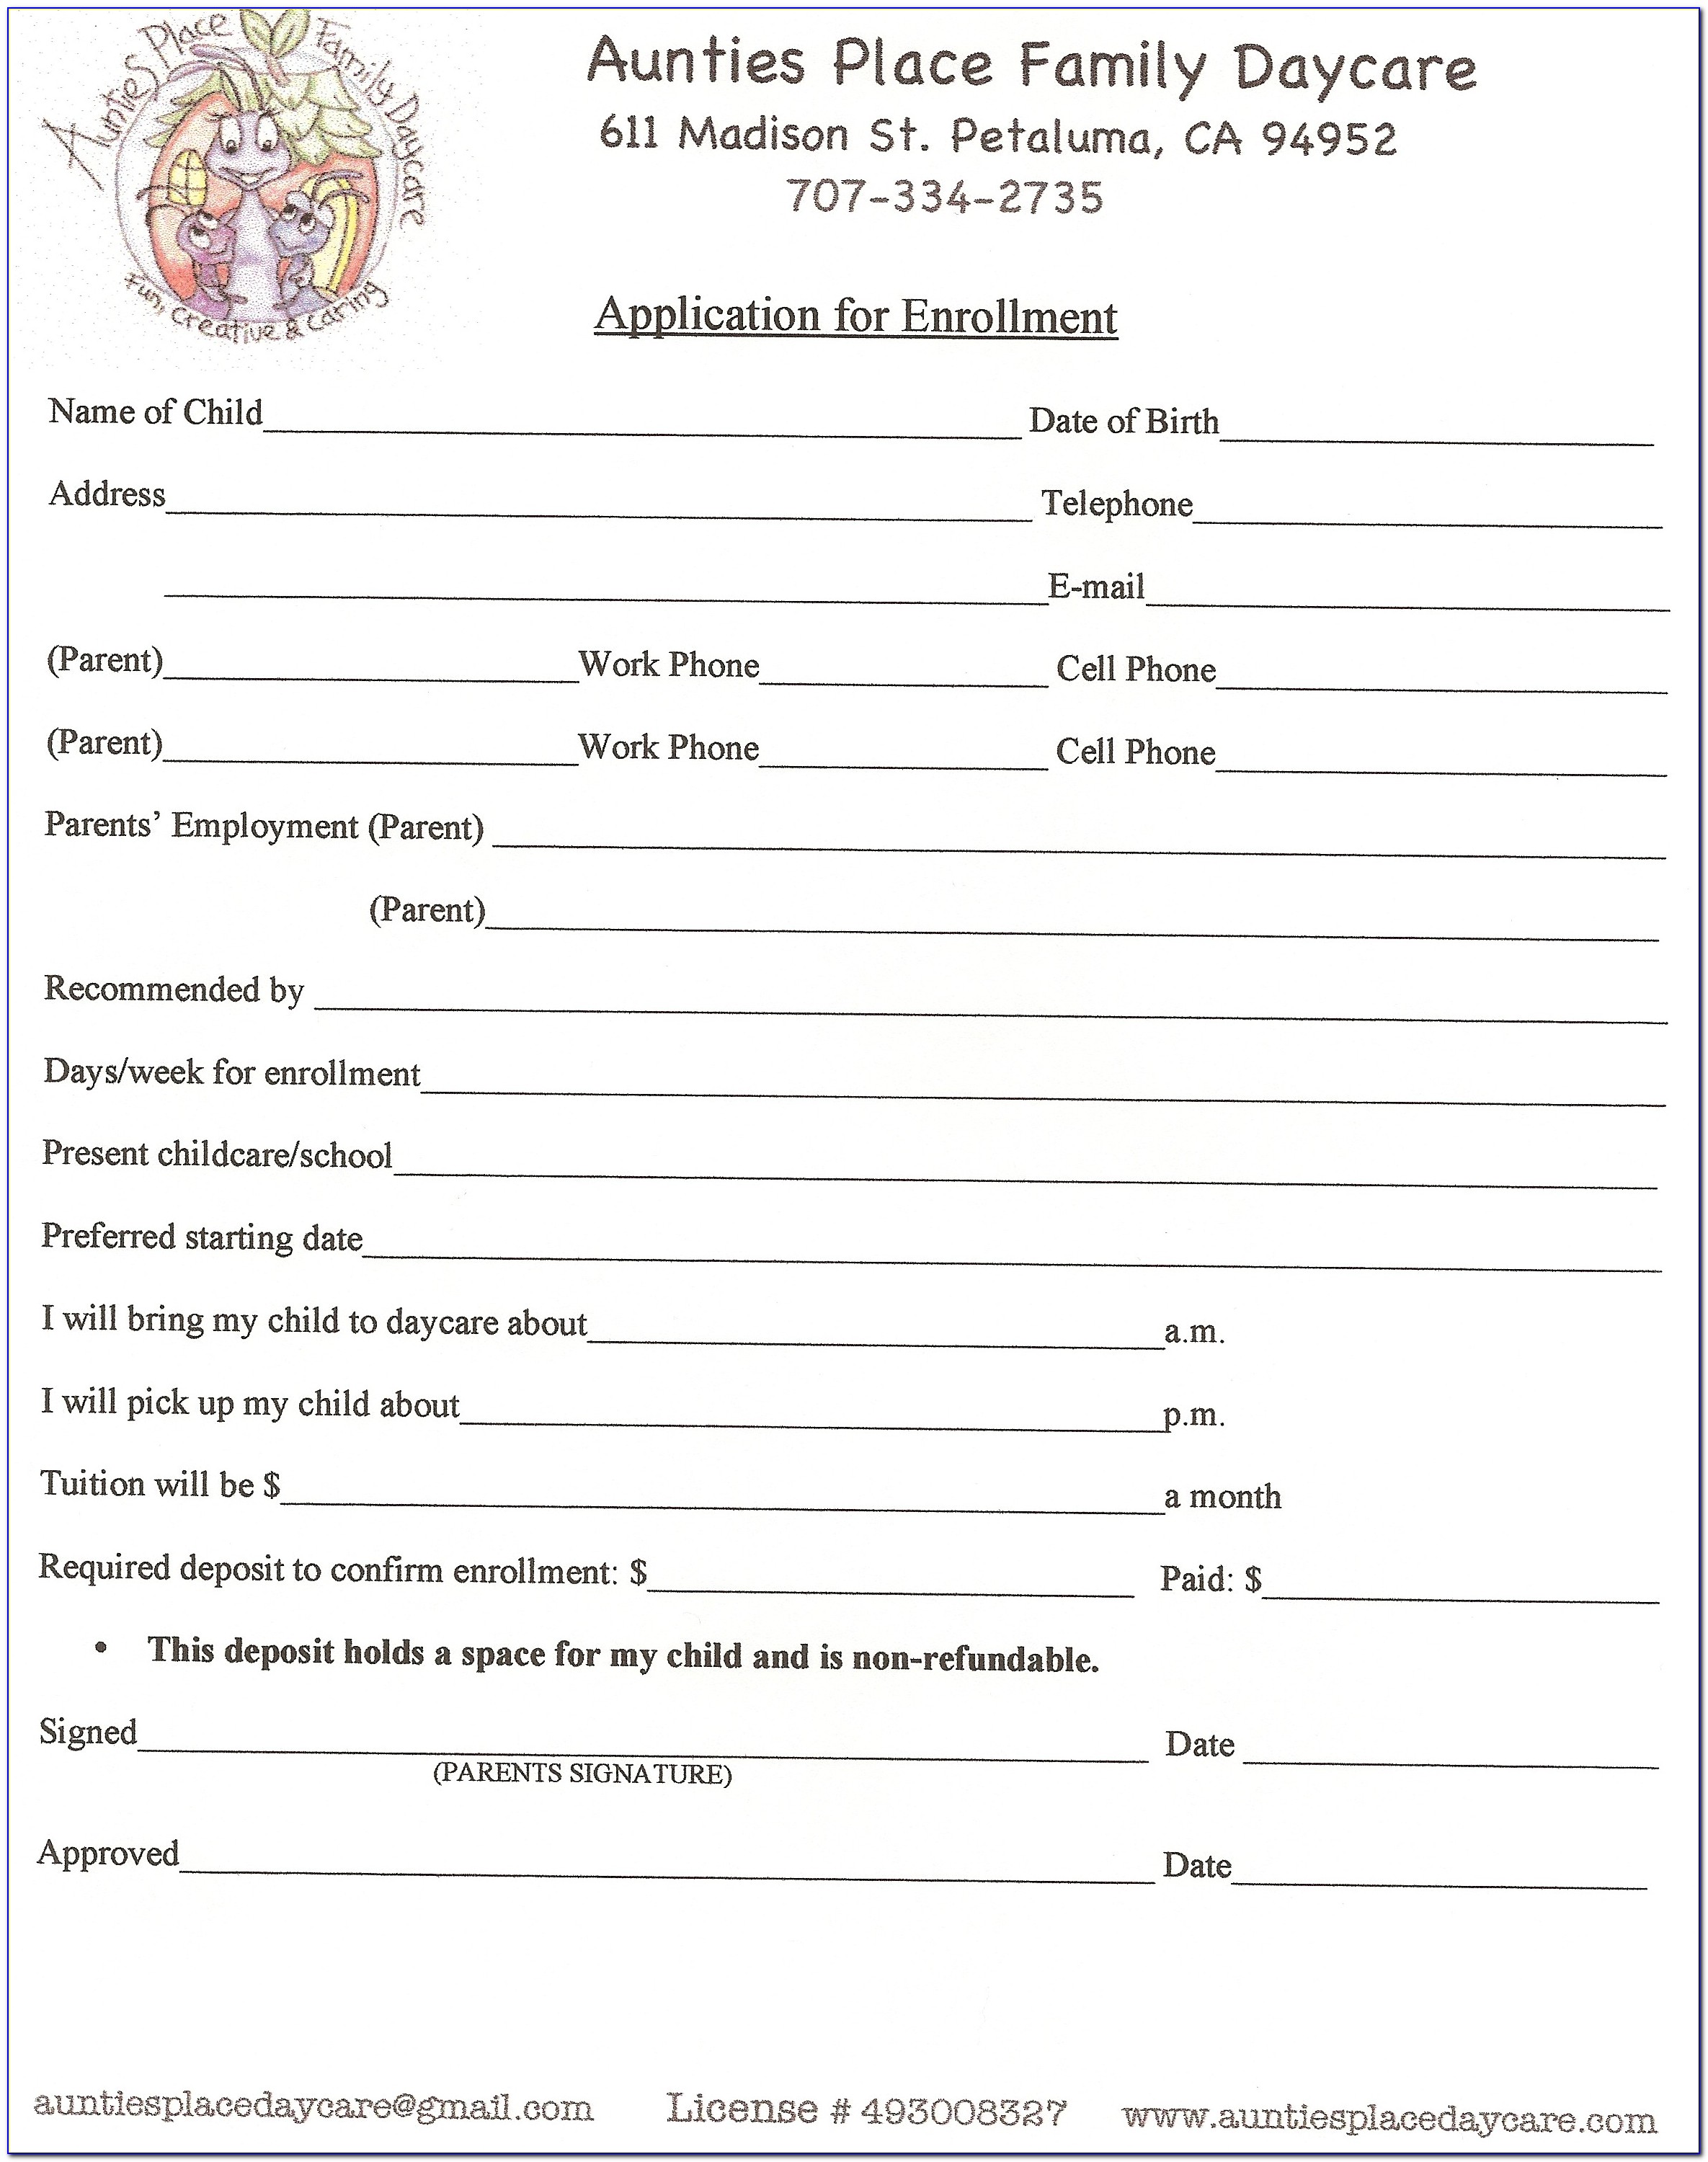 Daycare Enrollment Forms